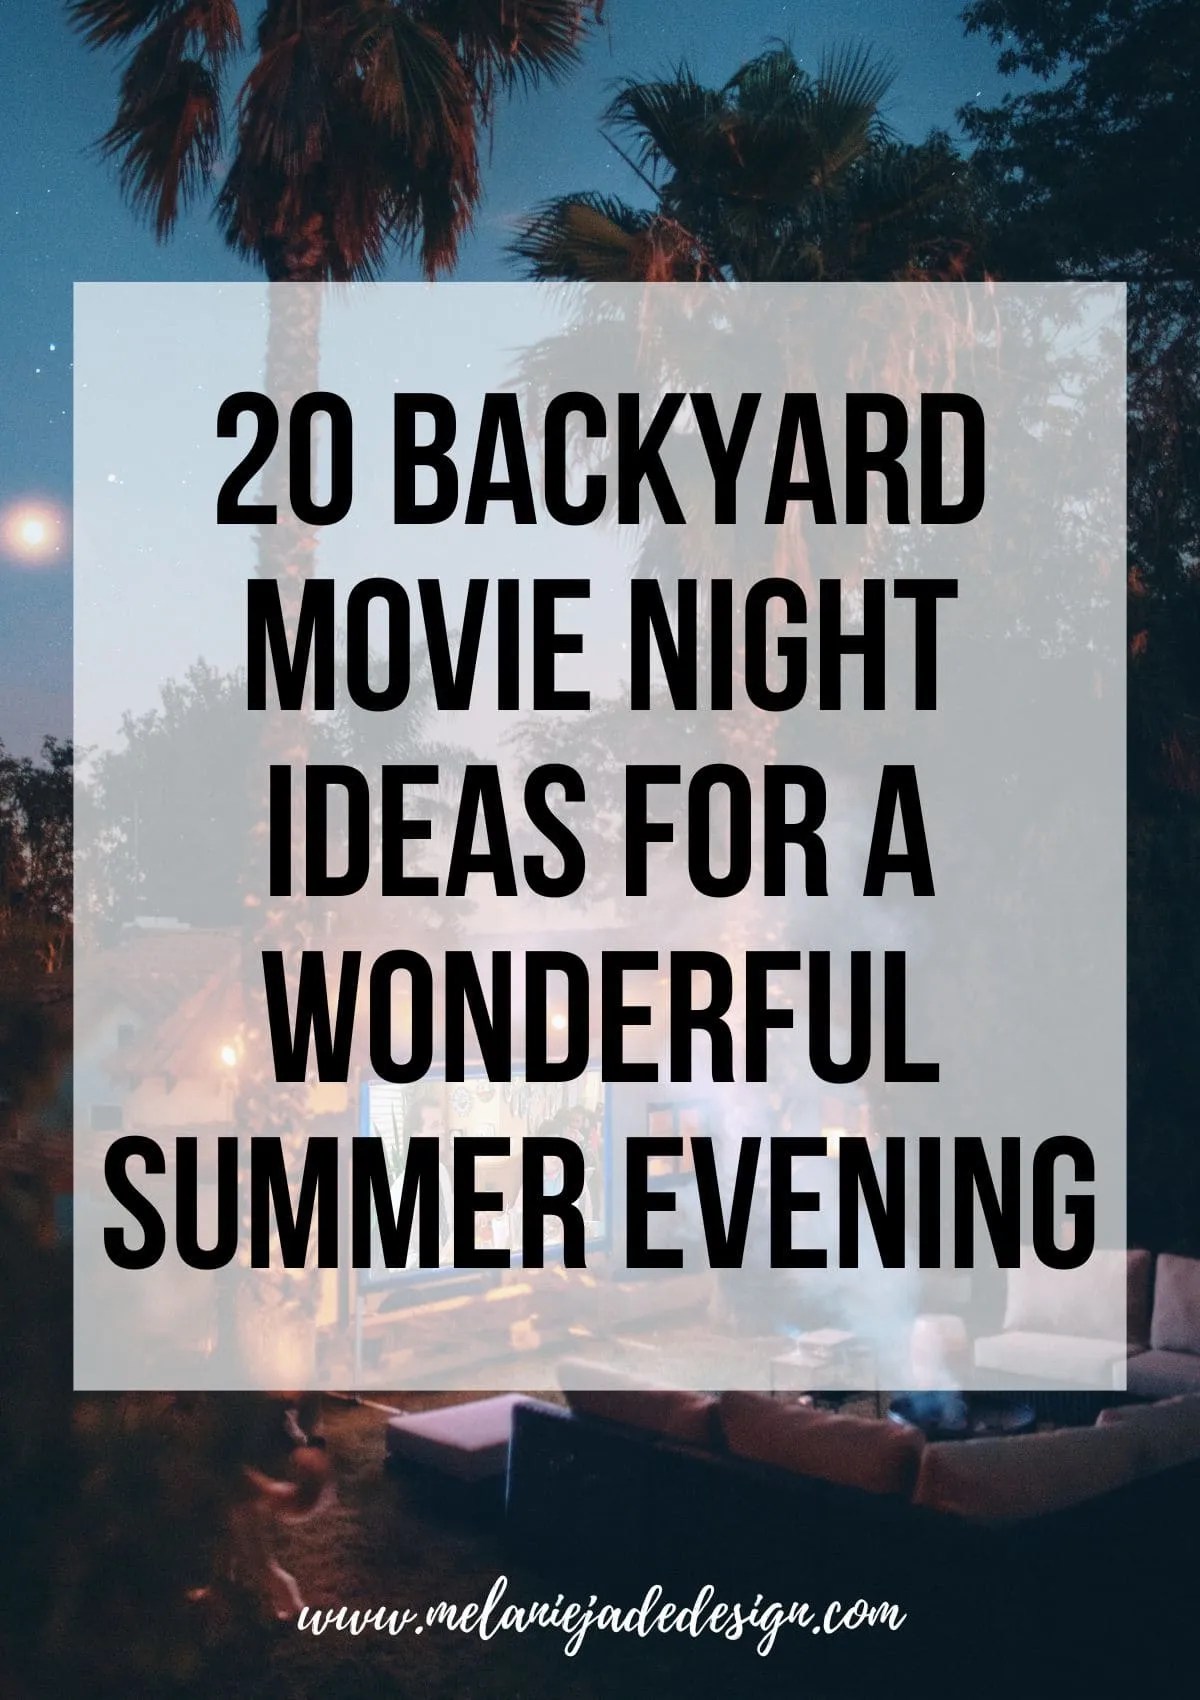 20 Backyard Movie Night Ideas for a Wonderful Summer Evening Pinterest pin